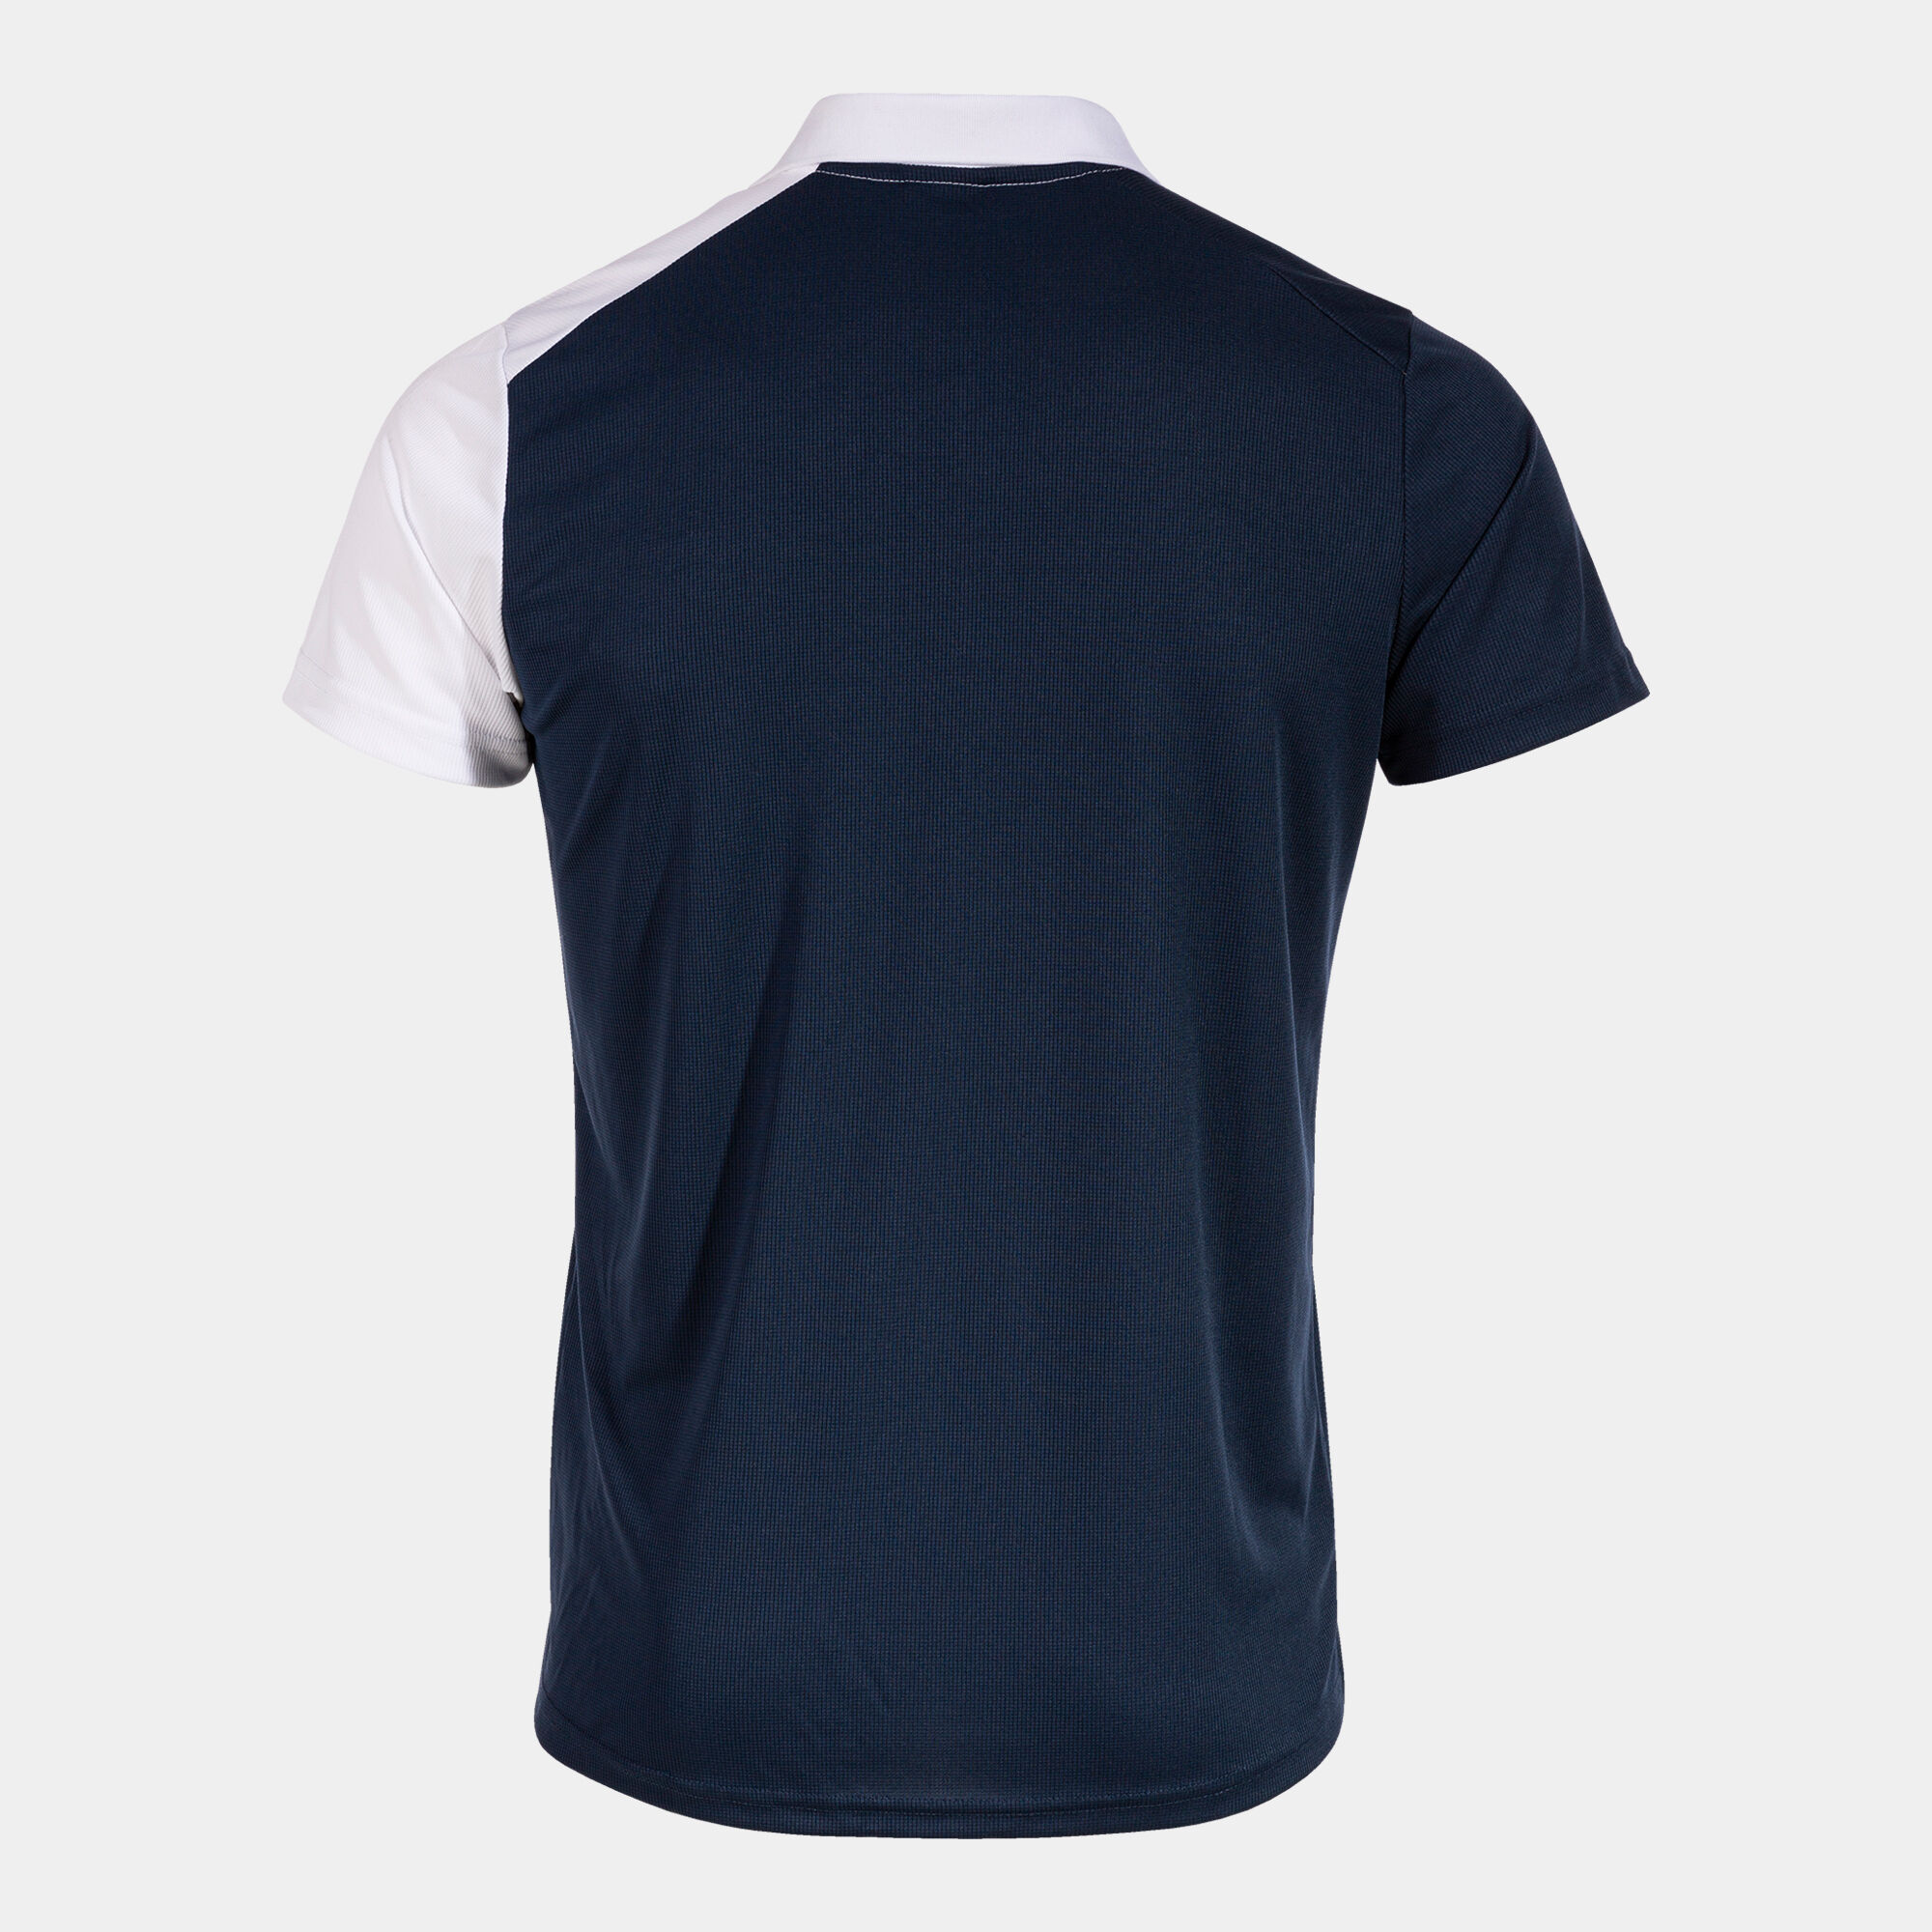 Polo shirt short-sleeve International Padel Federation